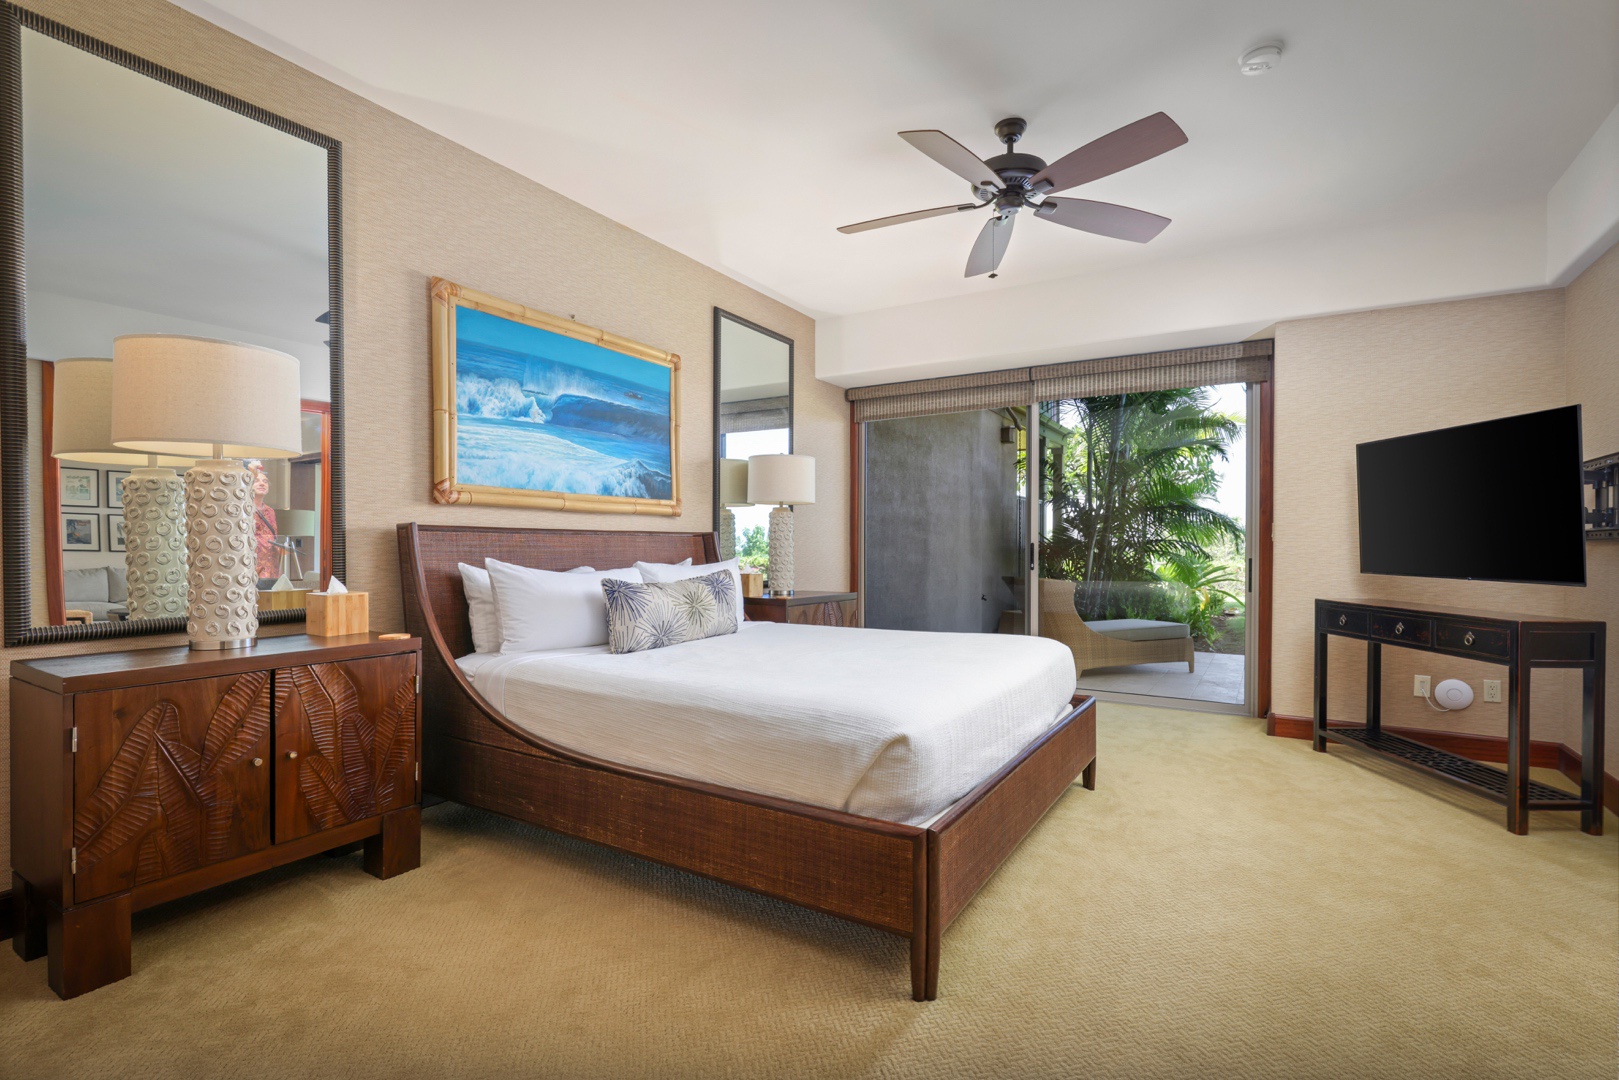 Kailua Kona Vacation Rentals, 3BD Ke Alaula Villa (210B) at Four Seasons Resort at Hualalai - Primary bedroom suite with king bed, flat screen television, deck, walk-in closet and ensuite bath.